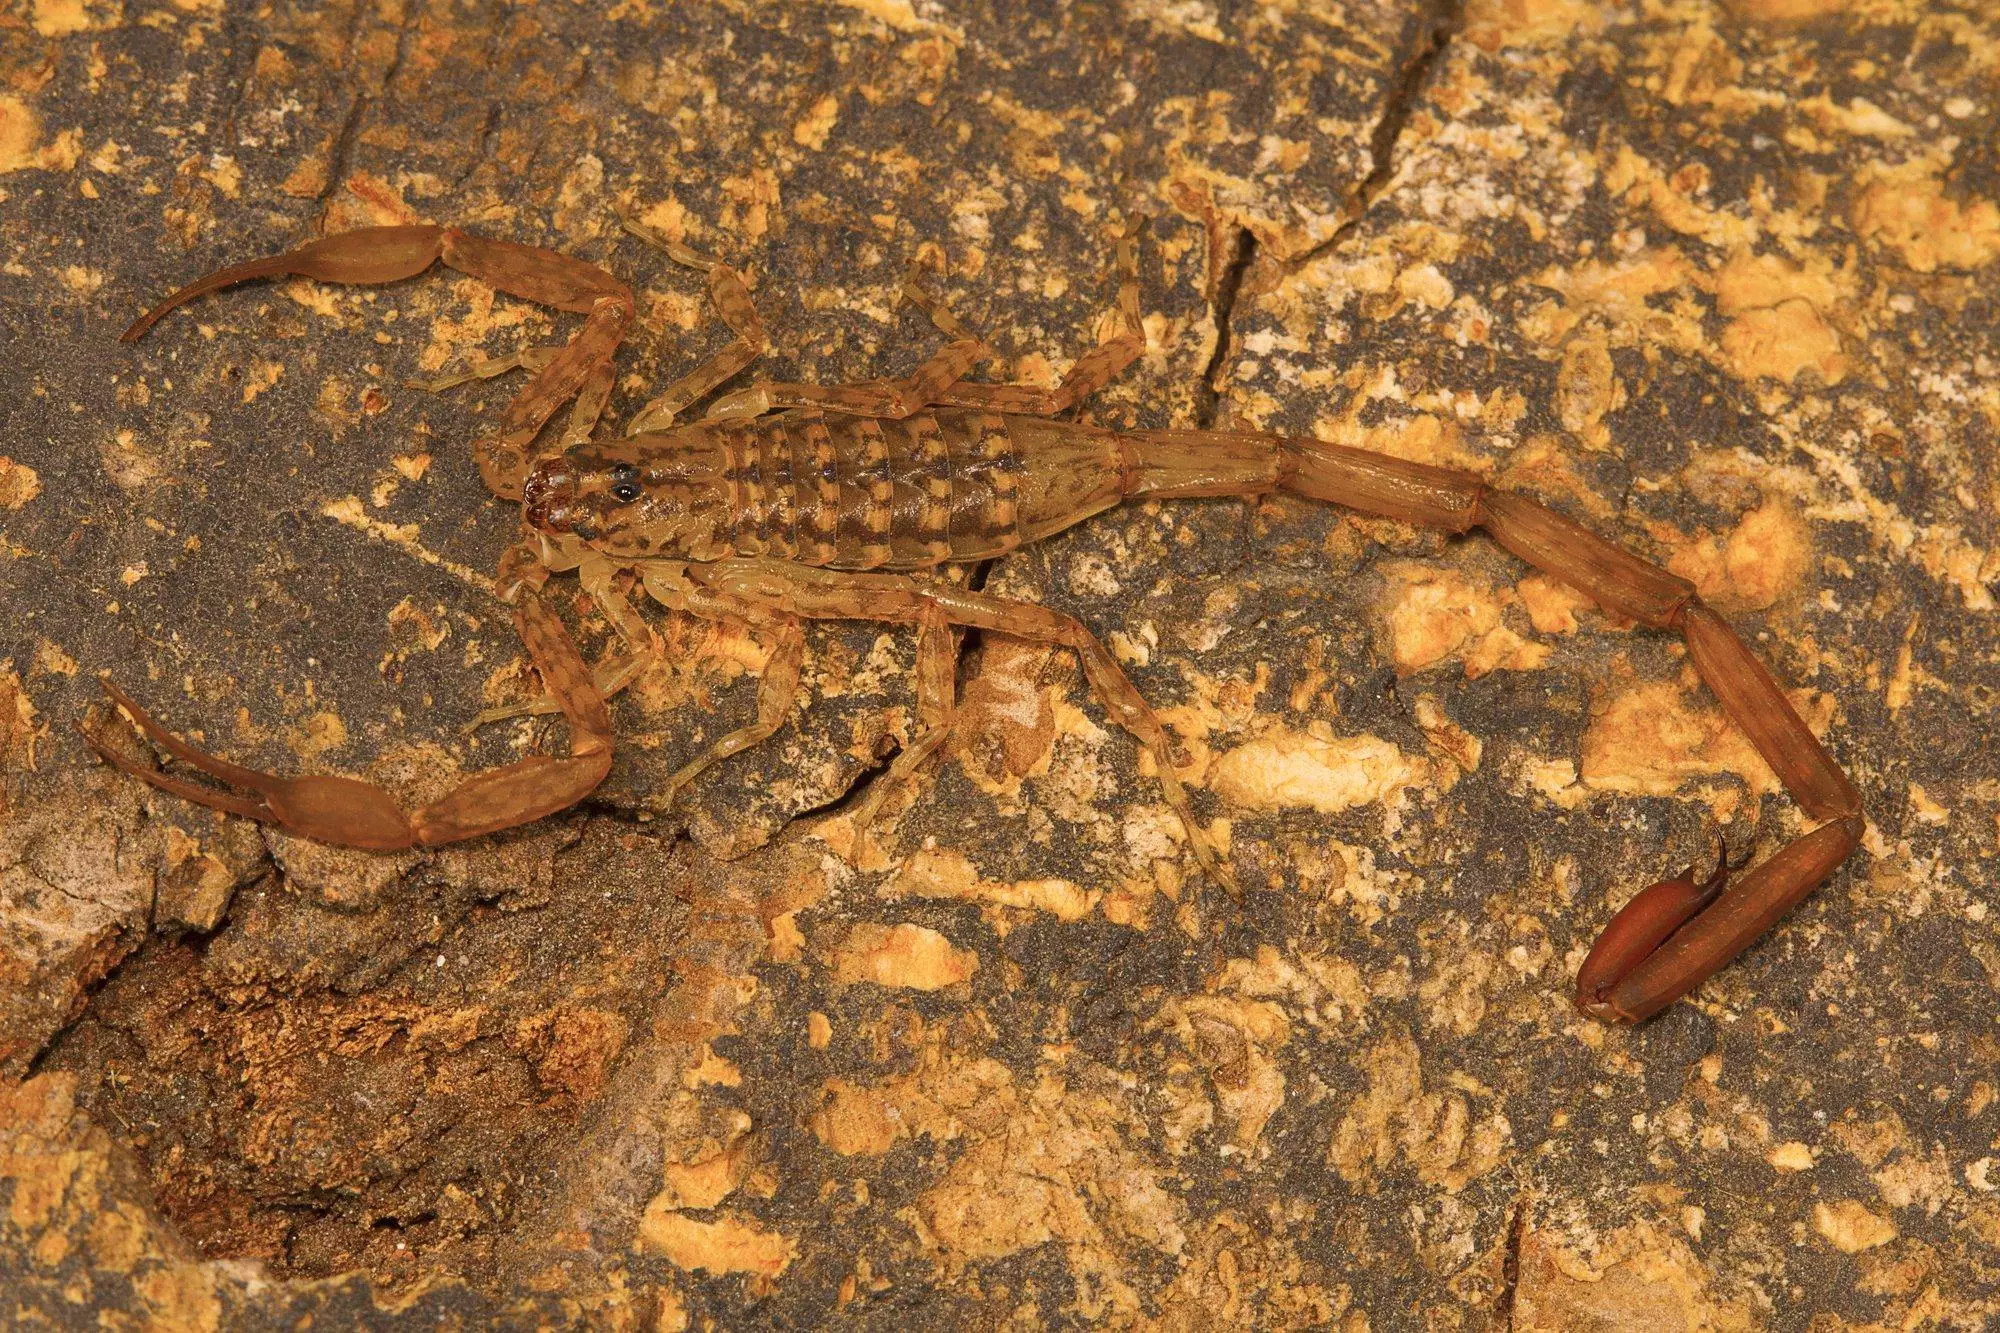 Bark scorpion, Isometrus vittatus which bears a long metasoma and short sting. Common on tree trunks. Chengalpettu, Tamil Nadu, India